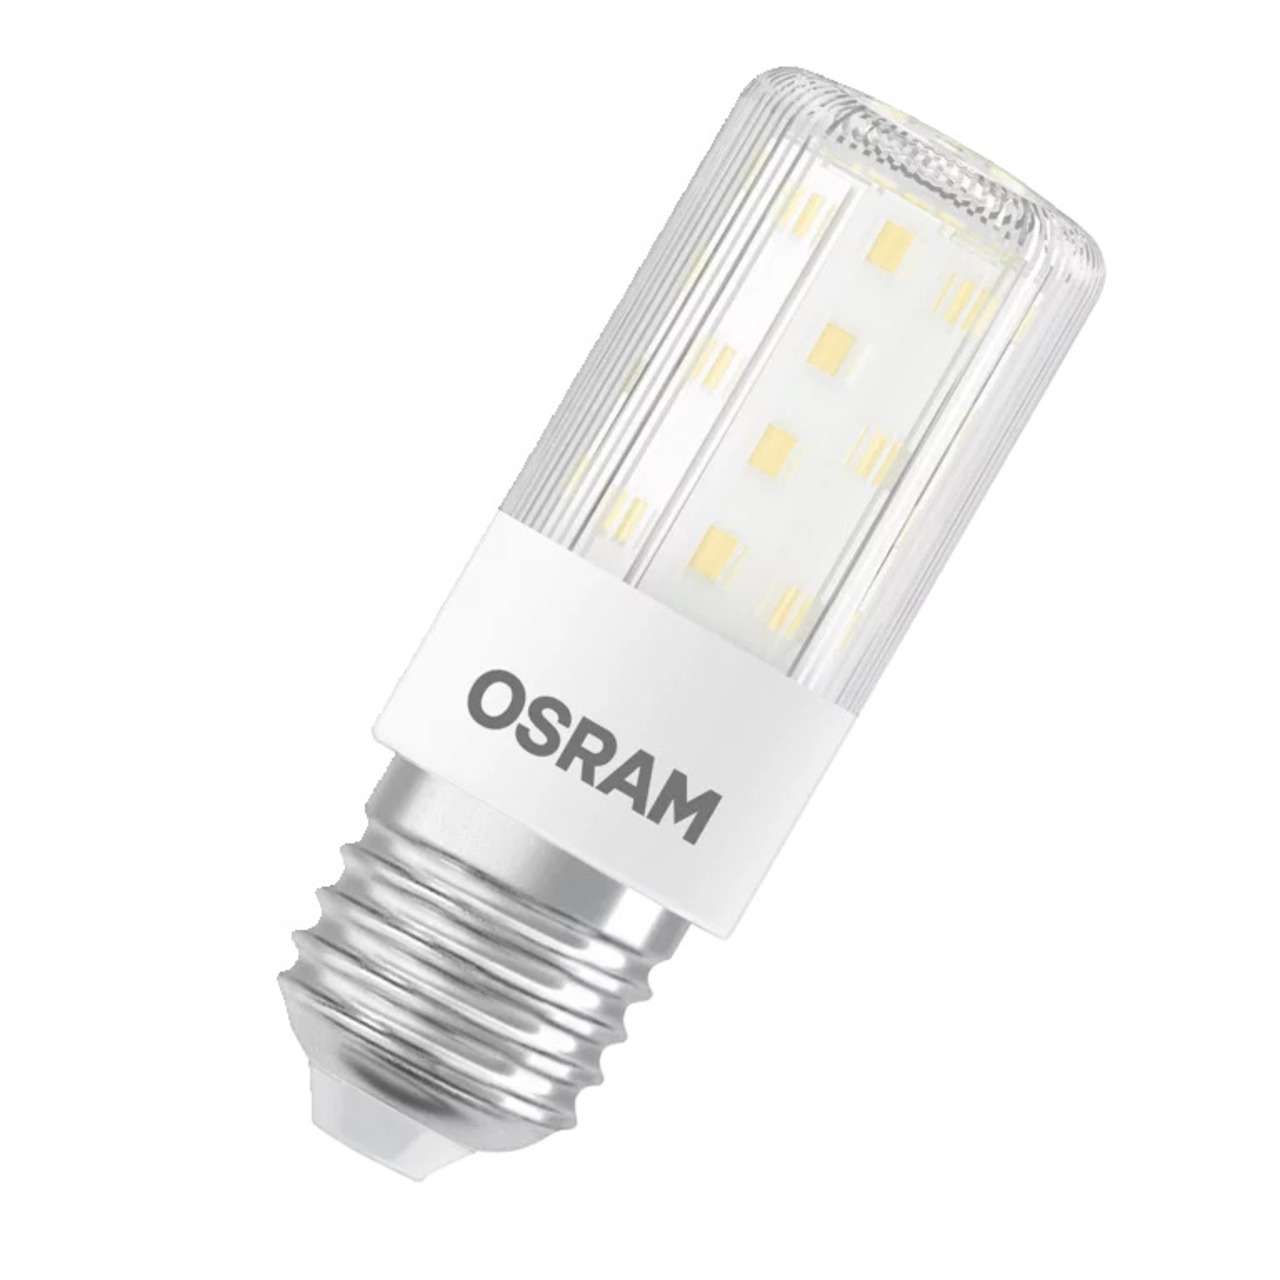 OSRAM 7-3-W-LED-Lampe T32- E27- 806 lm- warmweiss- 320- dimmbar unter Beleuchtung